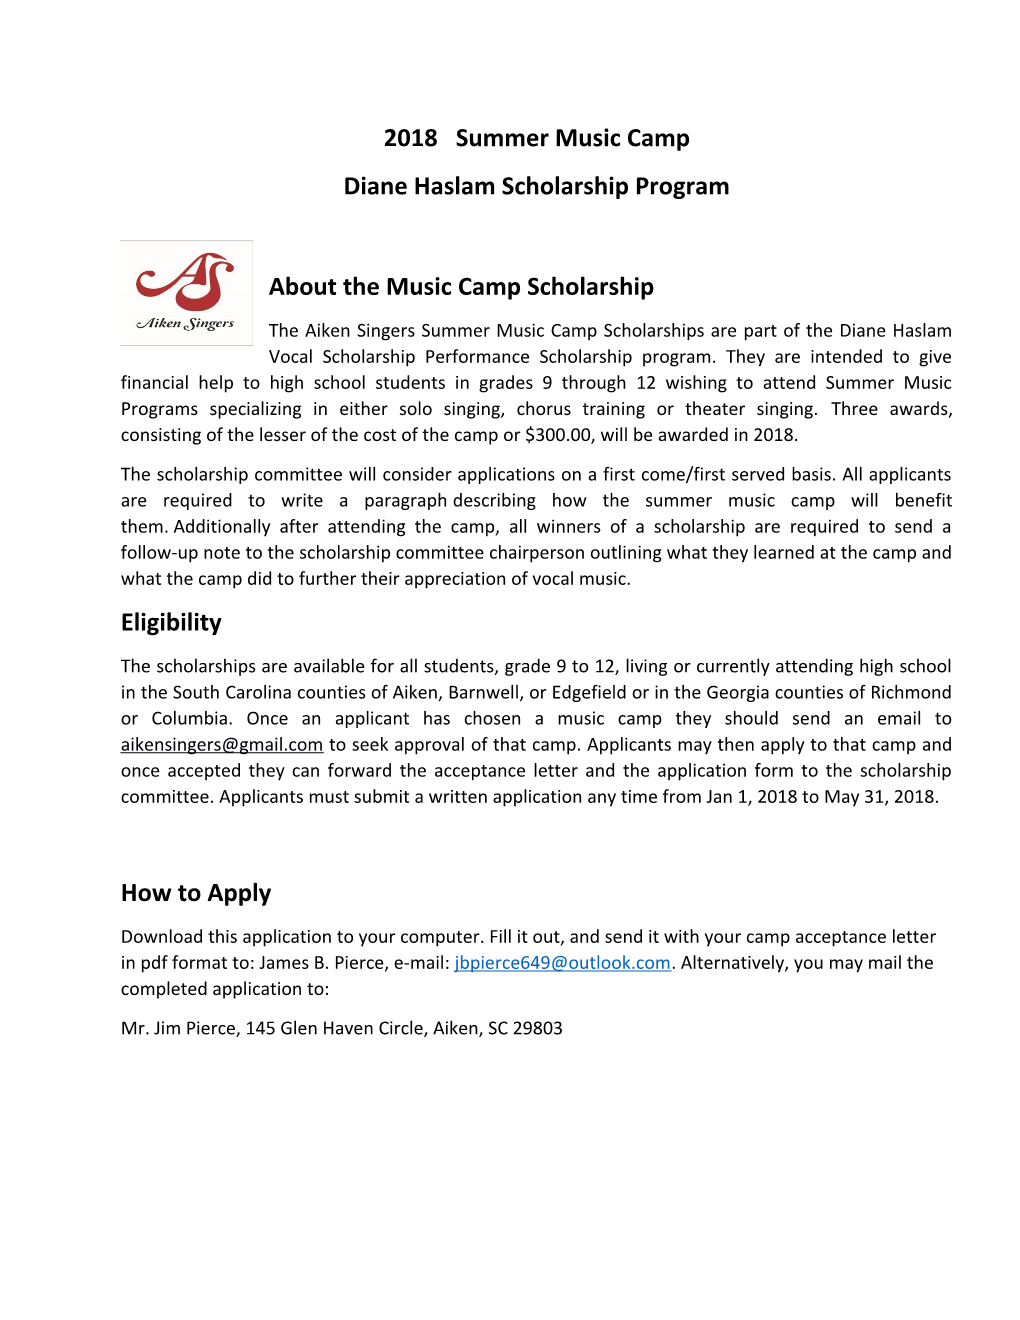 Diane Haslam Scholarship Program